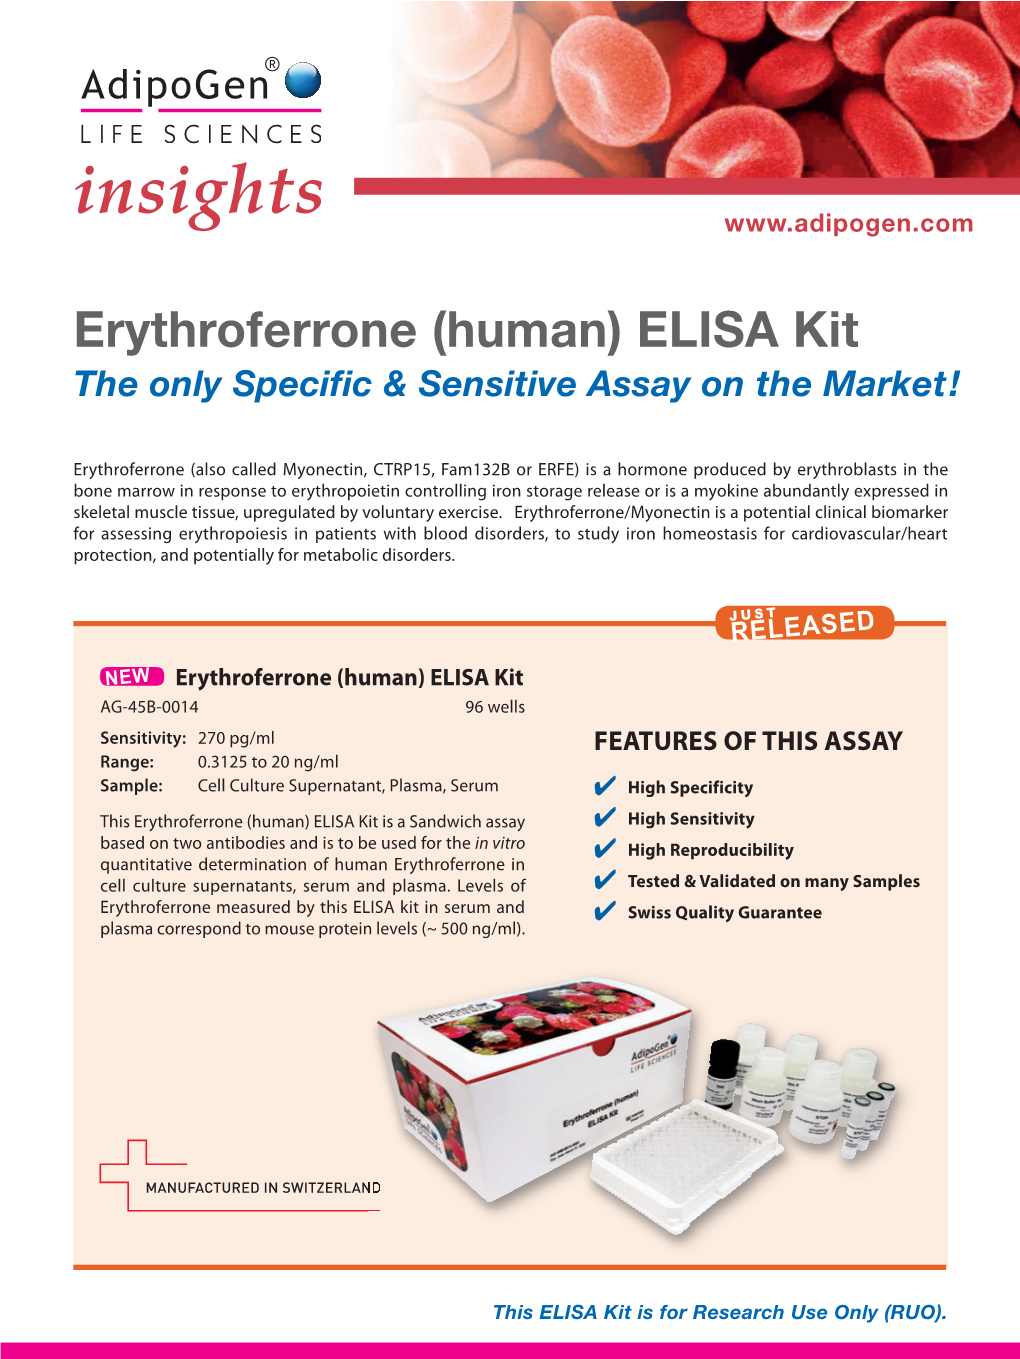 Erythroferrone (Human) ELISA Kit the Only Specific & Sensitive Assay on the Market!